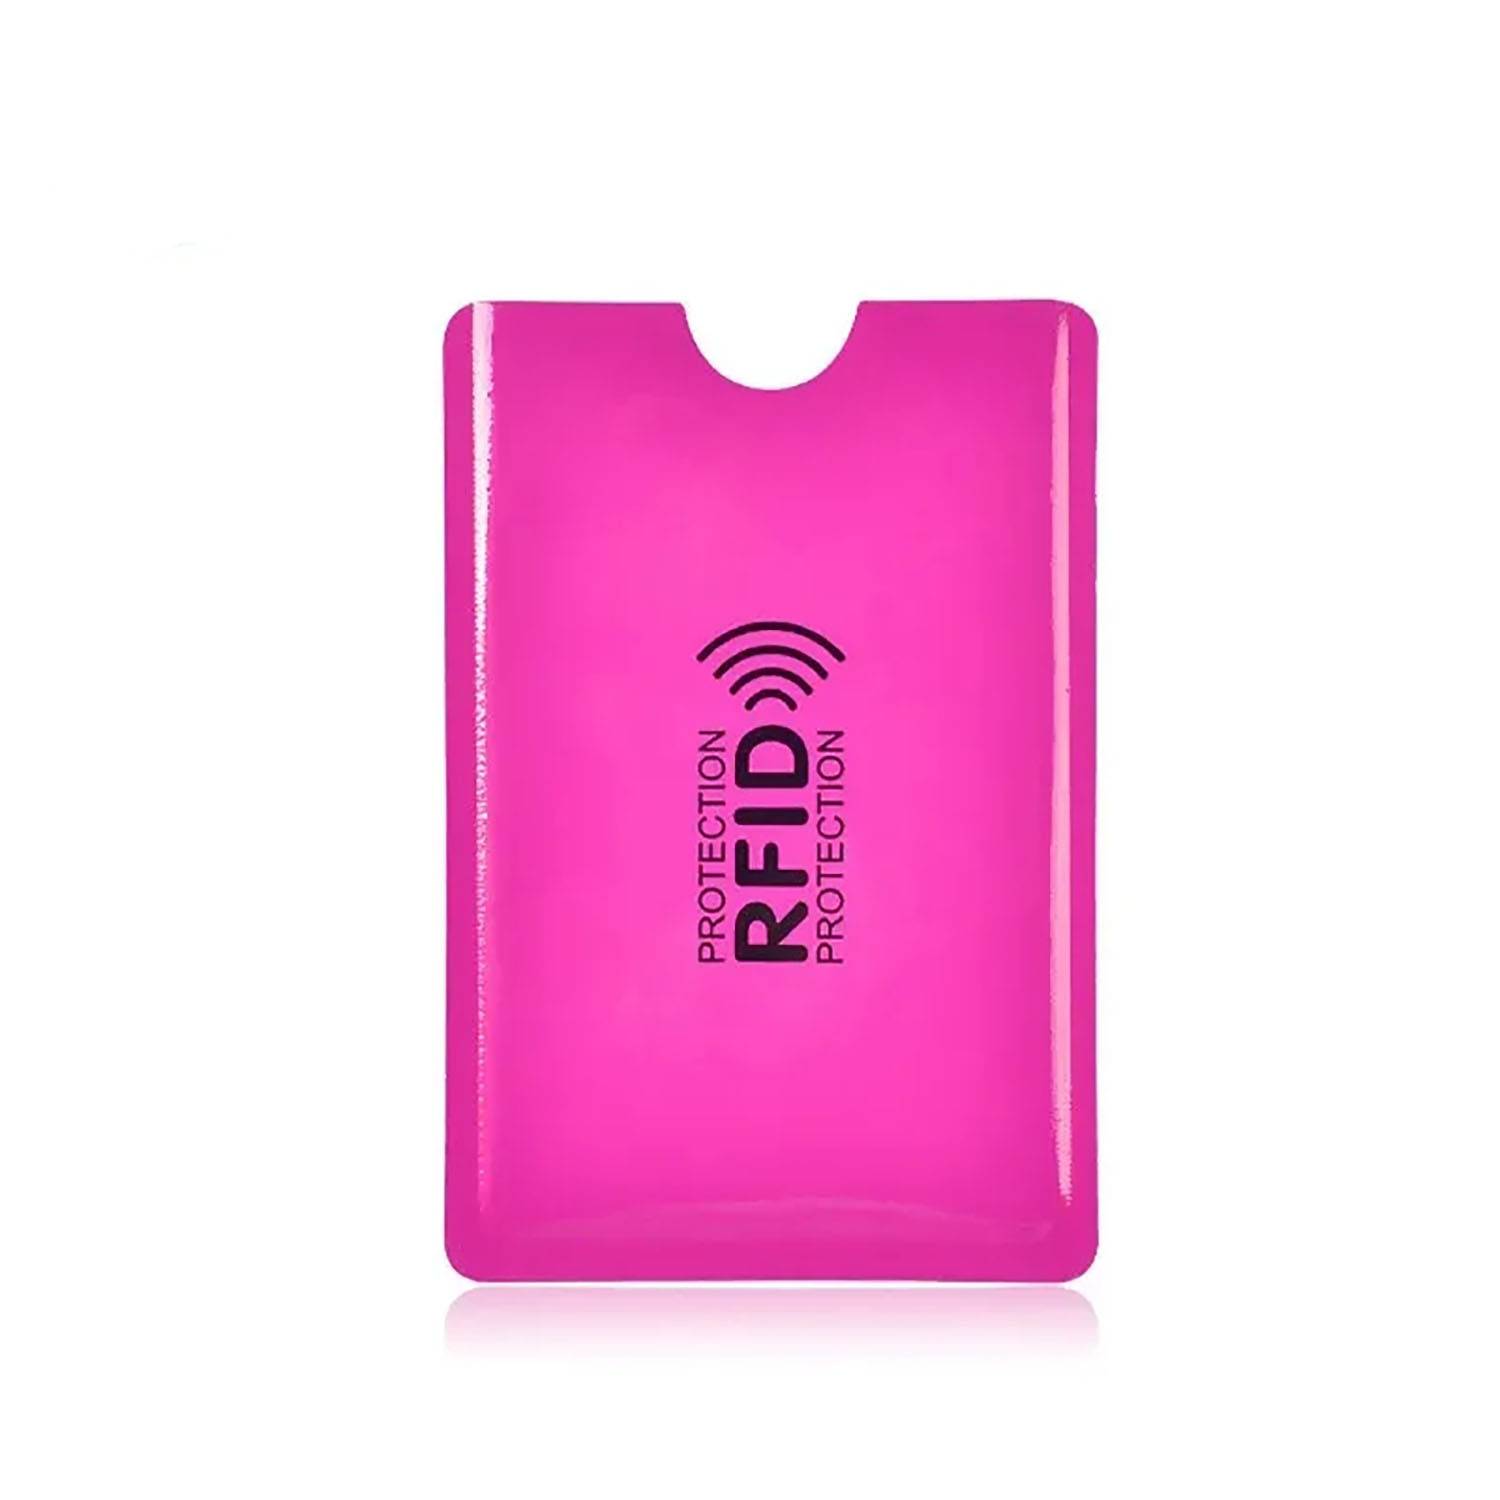 Funda Protectora Tarjeta Crédito RFID Anti robo Pack 3 Piezas Rosado  GENERICO